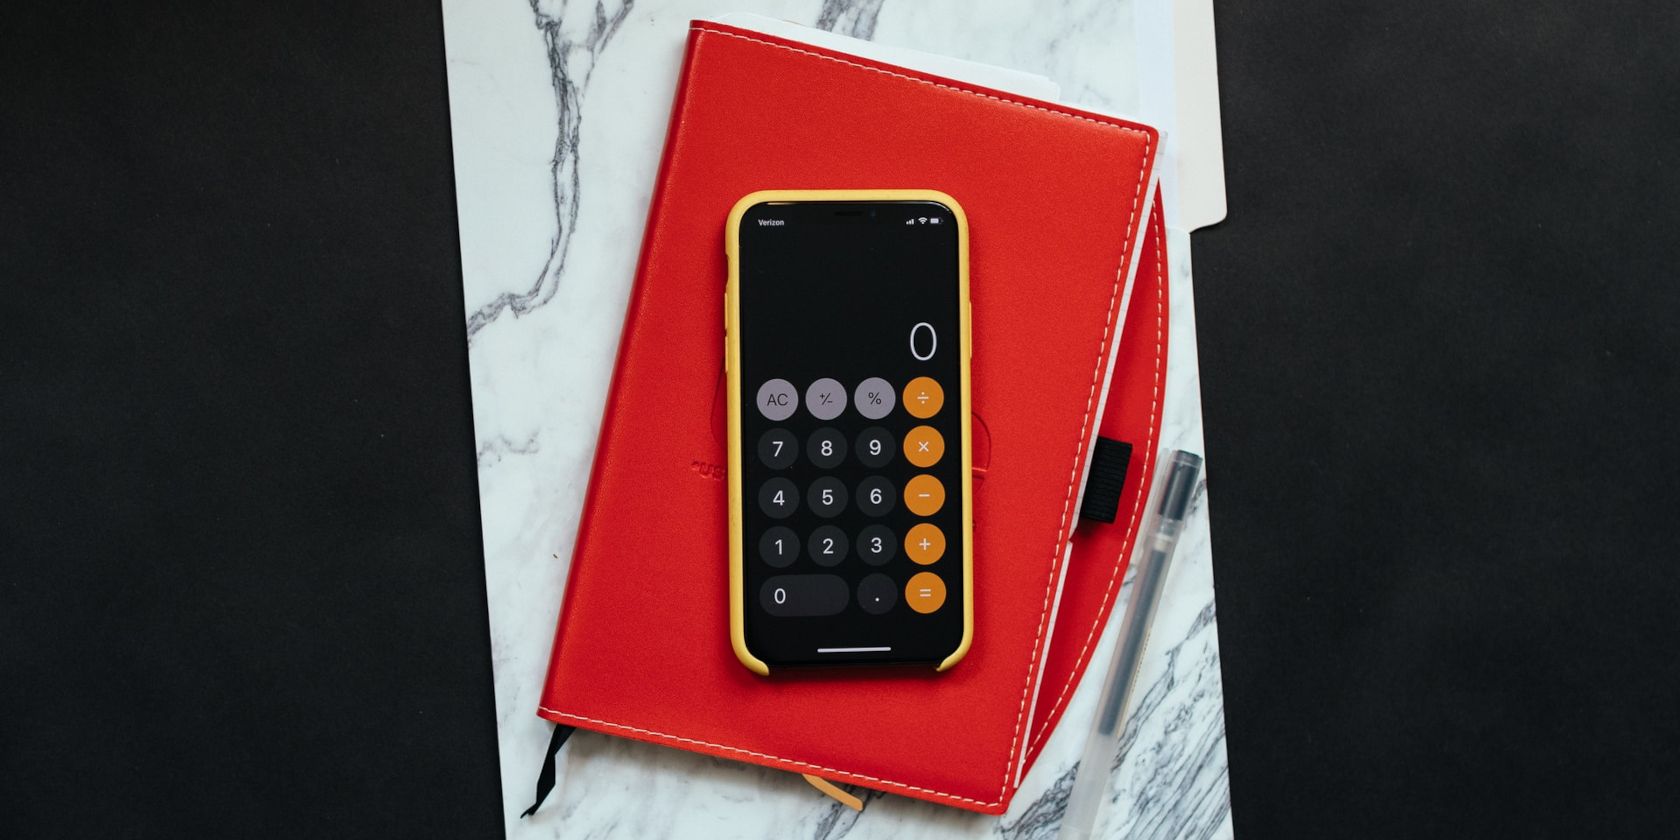 Calculator App on Smartphone and Notebook